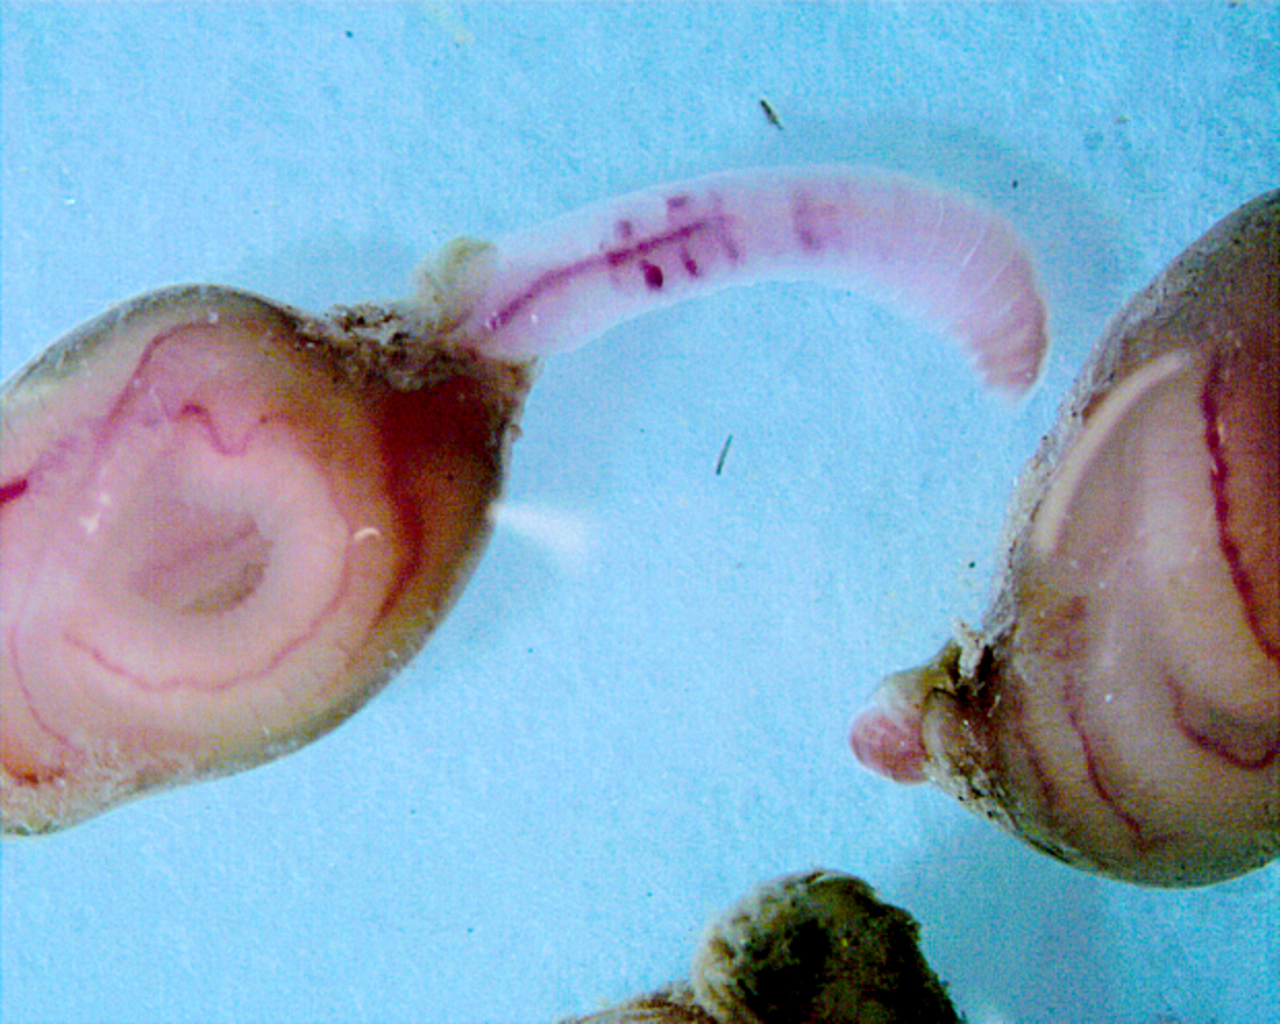 A juvenile earthworm of the species Aporrectodea caliginosa leaves its cocoon